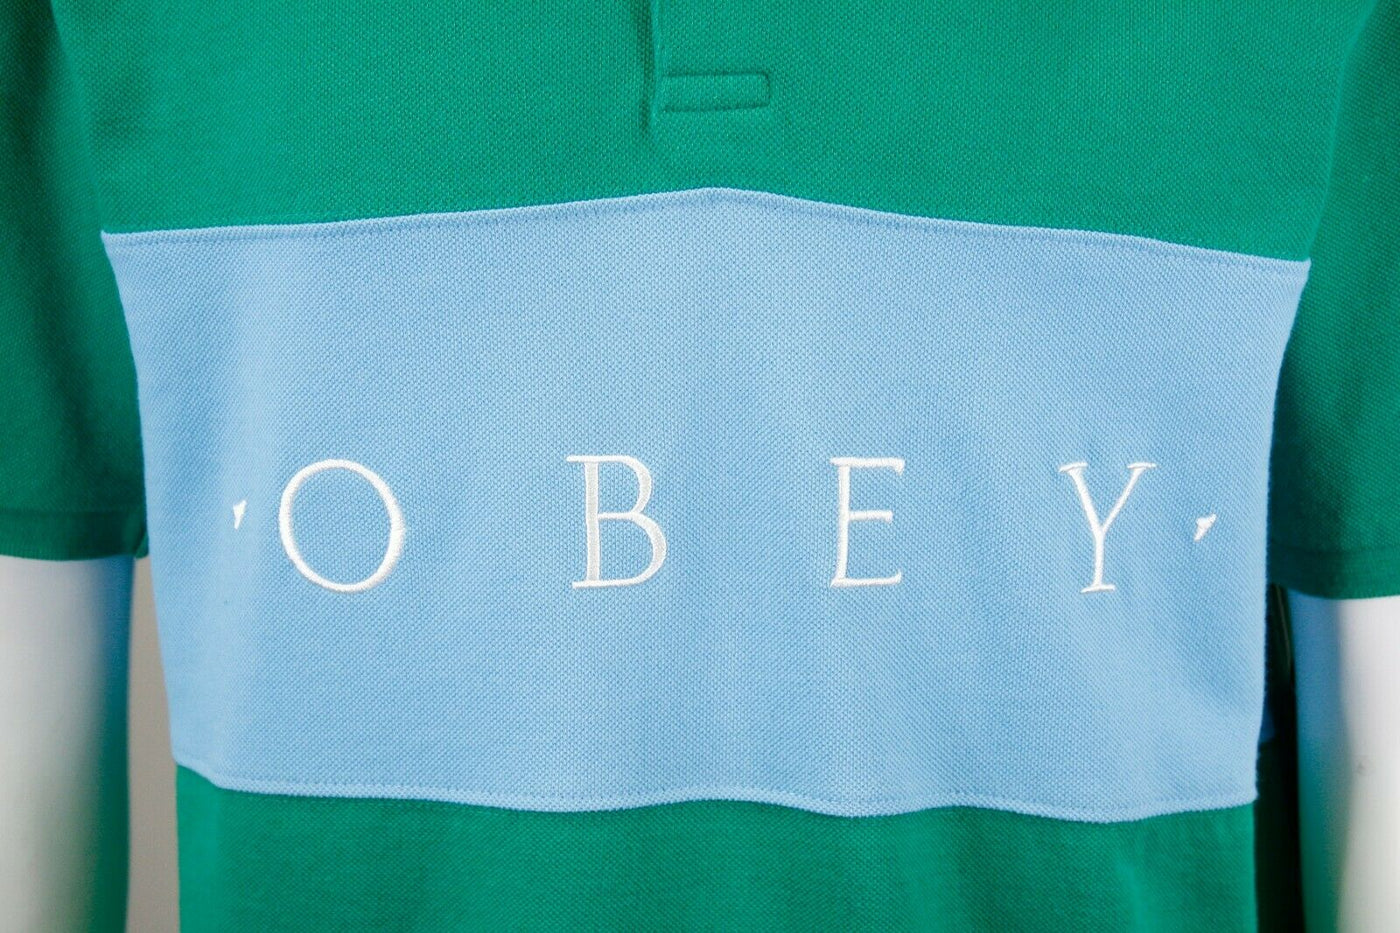 OBEY Men's Color Block Button S/S Polo Shirt (S34)